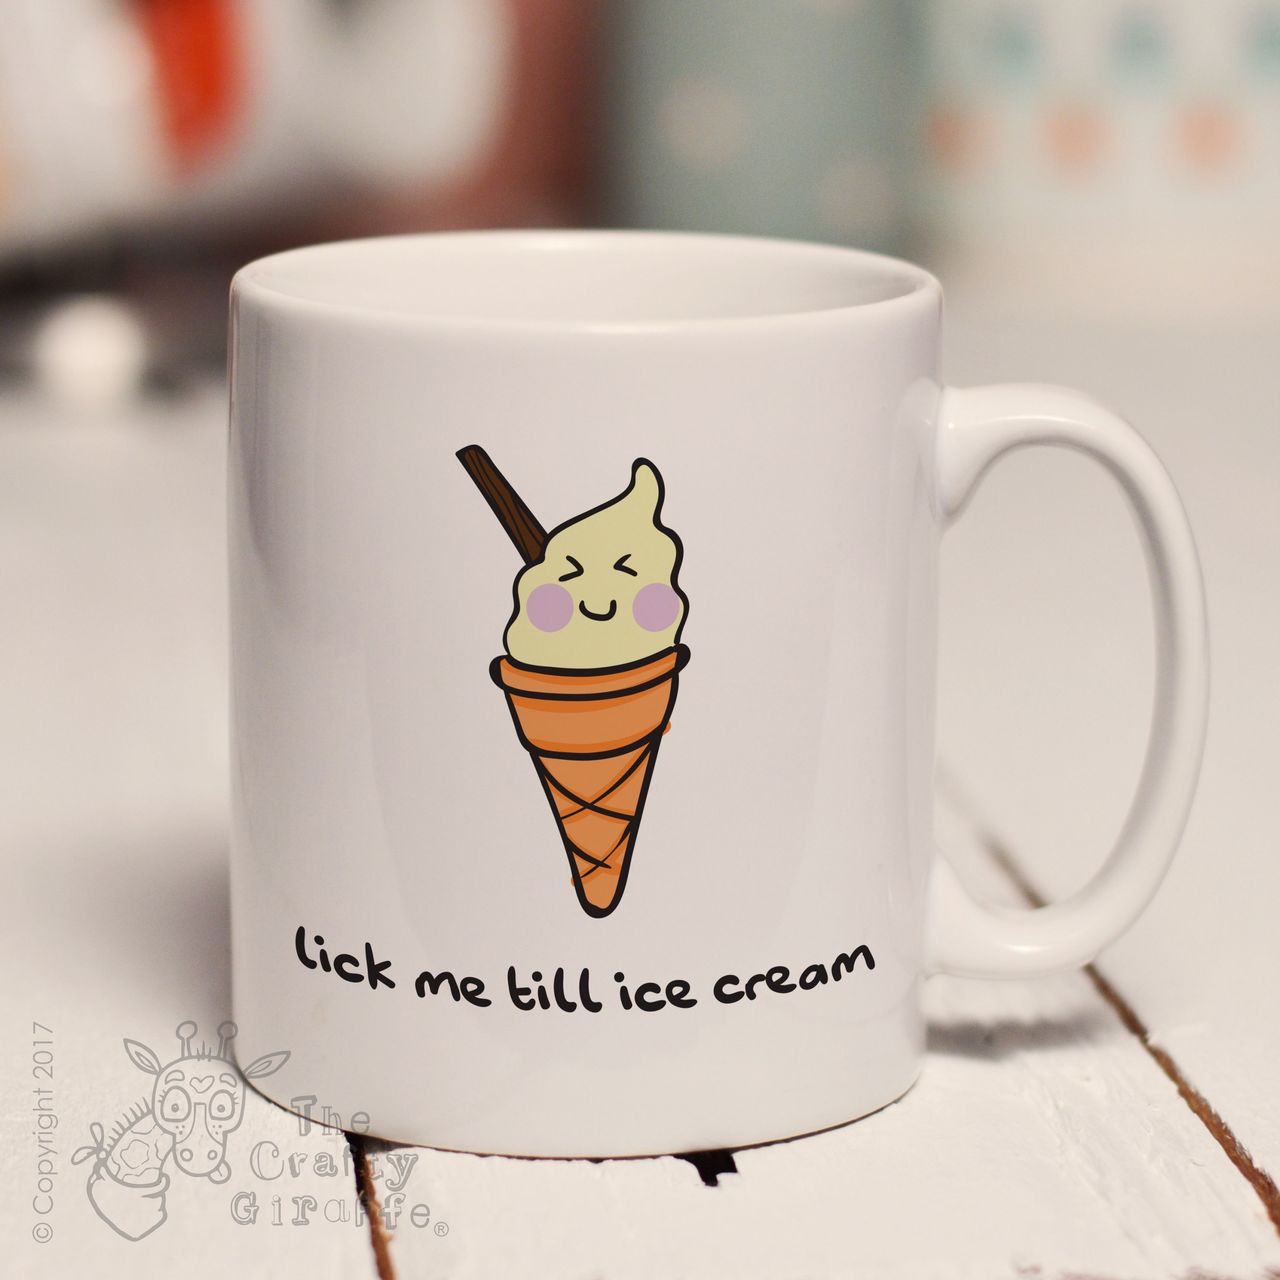 Lick me till ice cream mug